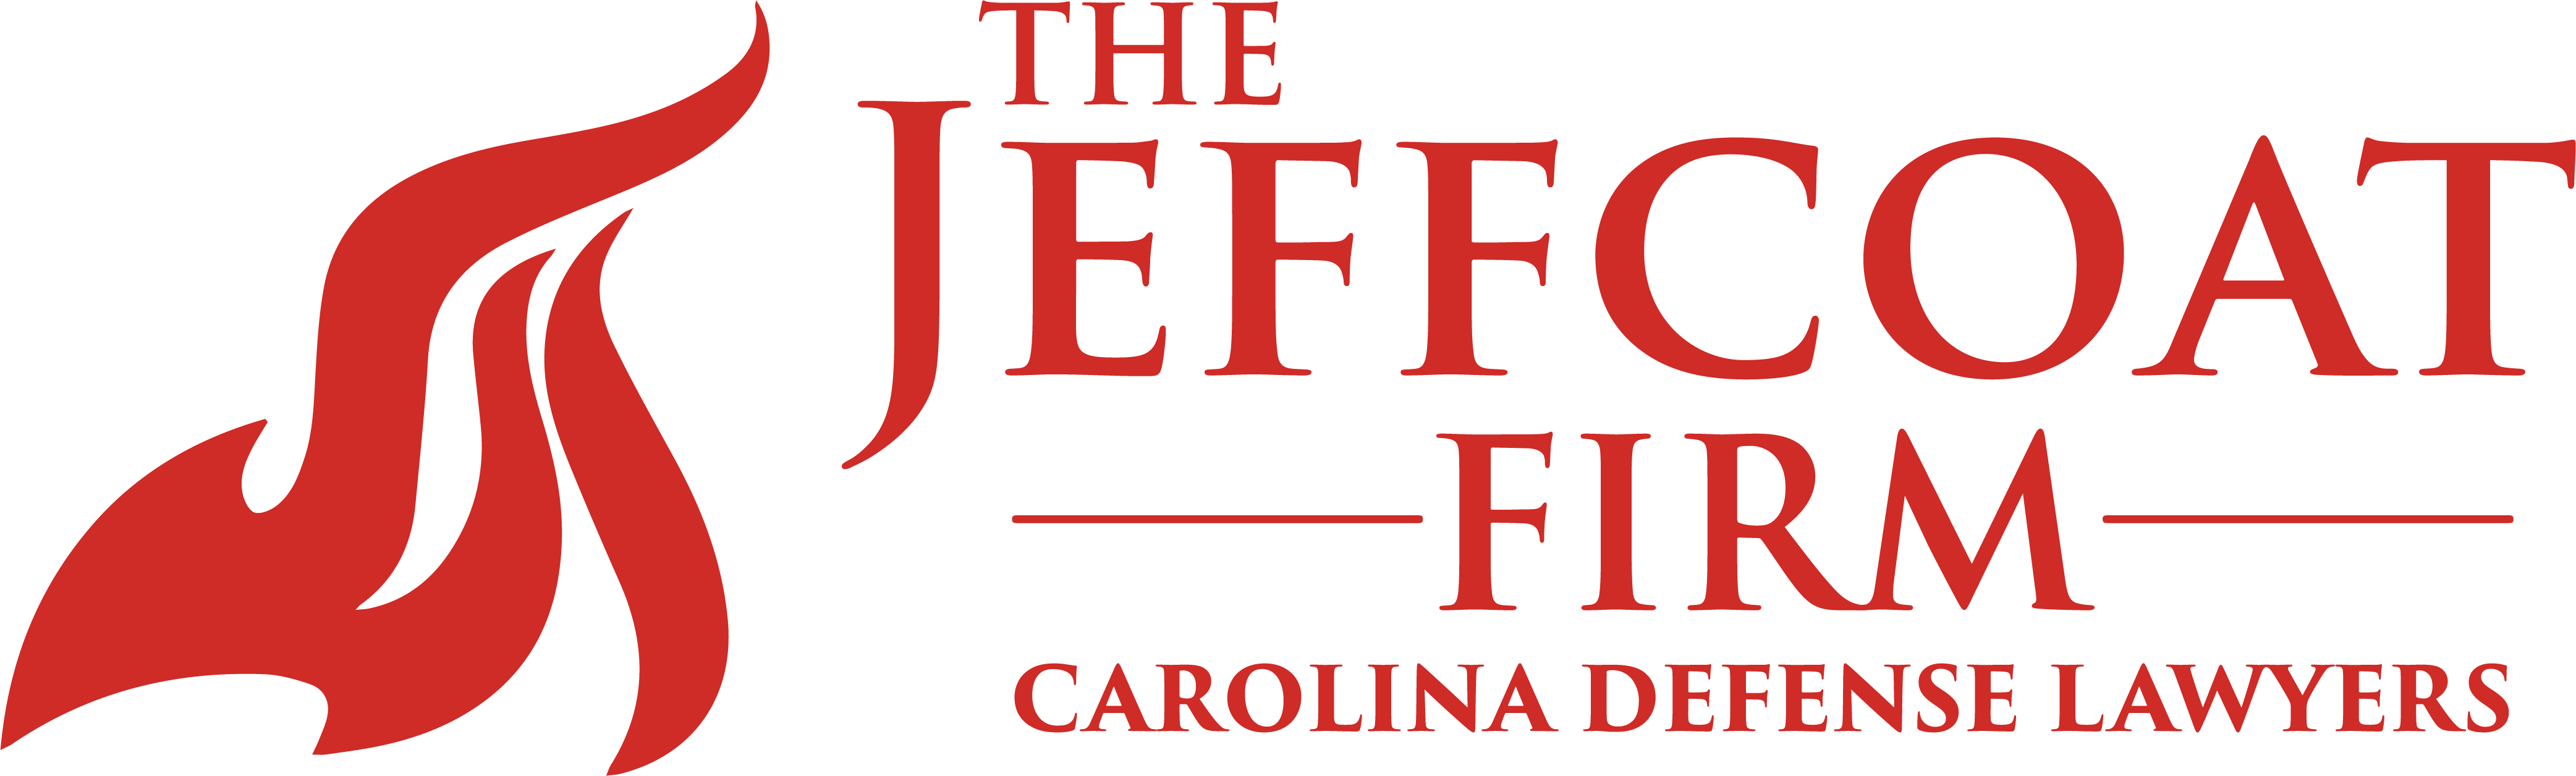 Jeffcoat Firm-Carolina Defense Lawyers-logo